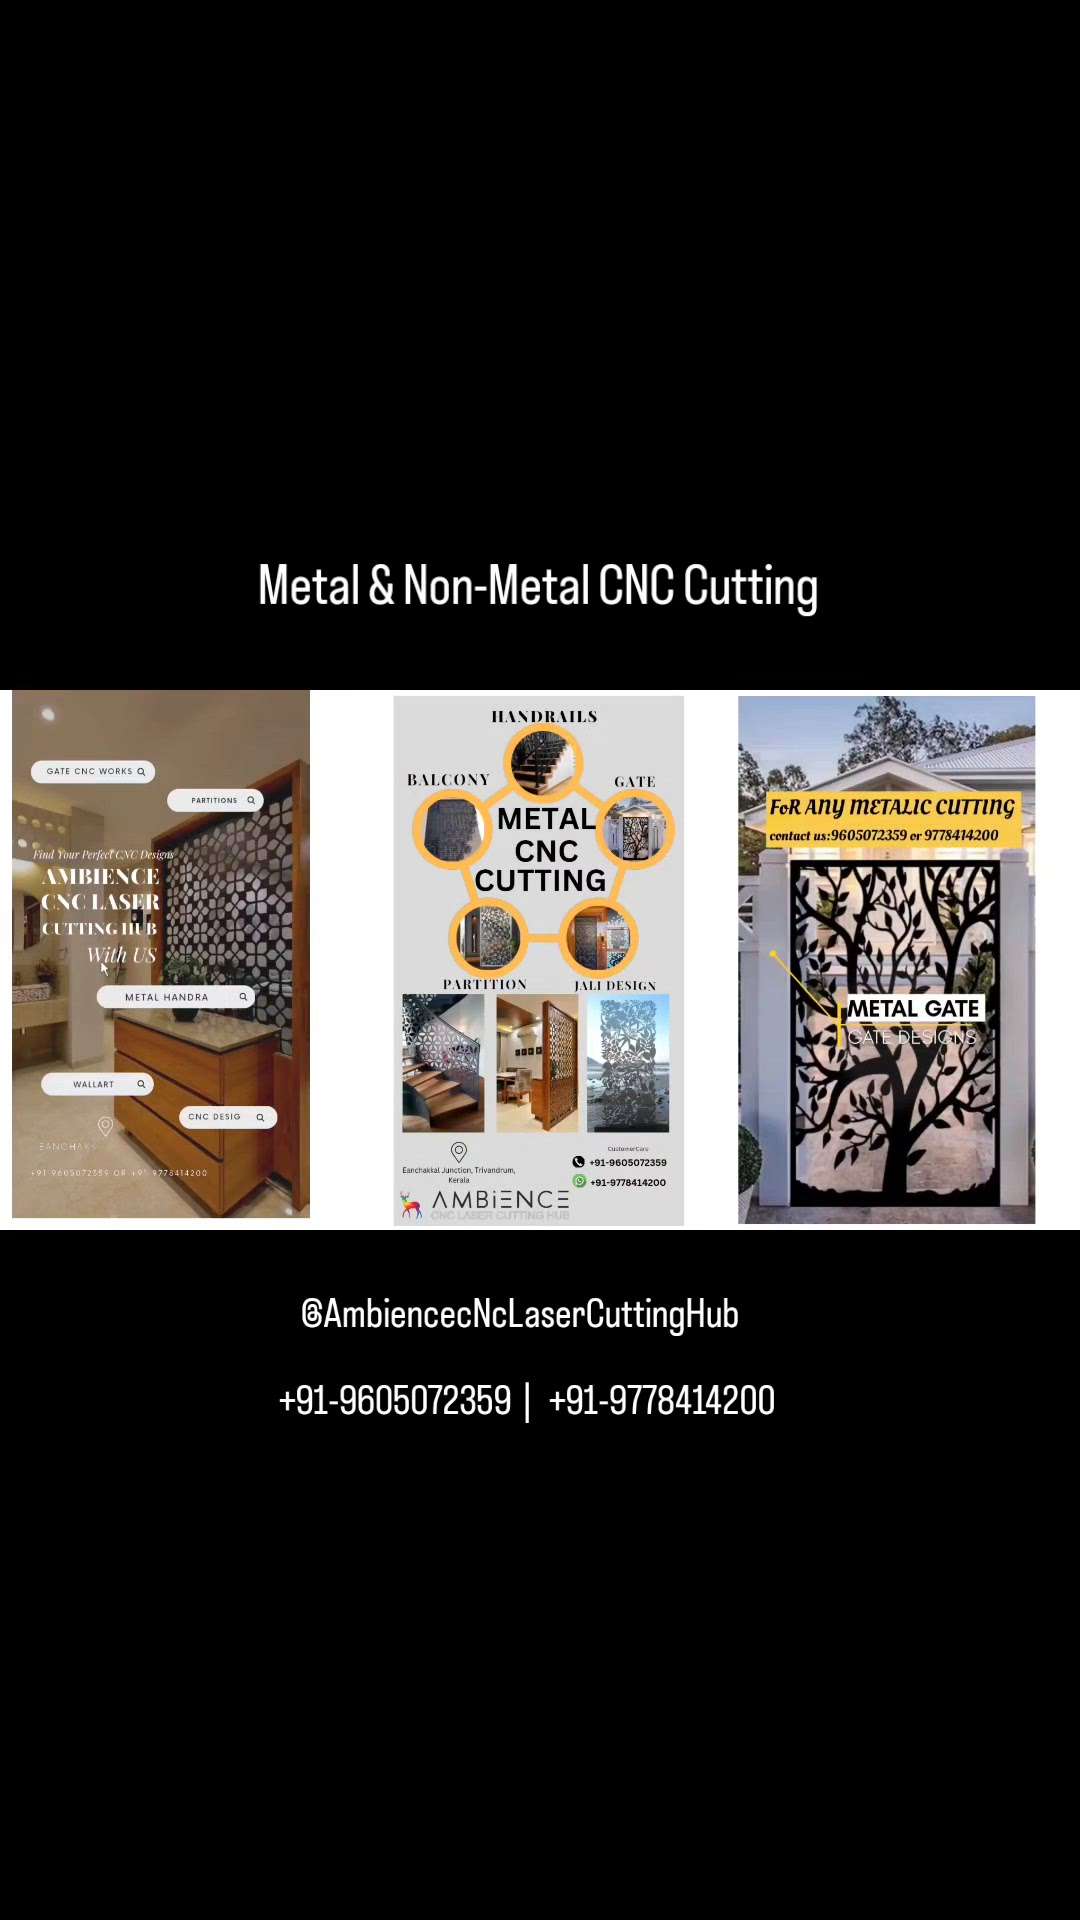 🔥𝐌𝐄𝐓𝐀𝐋 CNC CUTTING - HANDRAILS,GATE,ROOFING, WINDOW, PARTITIONS, FALSE CEILING etc 🔥
+𝟗𝟏-𝟕𝟗𝟎𝟕𝟖𝟓𝟕𝟑𝟑𝟒 / +𝟗𝟏-𝟗𝟕𝟕𝟖𝟒𝟏𝟒𝟐𝟎𝟎.
𝑨𝑴𝑩𝑰𝑬𝑵𝑪𝑬 𝑪𝑵𝑪 𝑳𝑨𝑺𝑬𝑹 𝑪𝑼𝑻𝑻𝑰𝑵𝑮  𝑯𝑼𝑩, 𝑵𝒆𝒂𝒓 𝑬𝒂𝒏𝒄𝒉𝒂𝒌𝒌𝒂𝒍 𝑱𝒖𝒏𝒄𝒕𝒊𝒐𝒏.𝑻𝑽𝑴.
#metalcnc #Metalpartition #metalart  #metalstaircase #metalhut #metalstairs #Metalfurniture #metalcladding #metalgates #metalwindows #MetalCeiling #MetalSheetRoofing #metalwelding #cncmetalcuting #cncjalicutting #cncgate #gateDesign #gateservice #metalhandrails #partiction #cnc #cnclasercutting #cncmetalcuting #metalcuttings #metalcnccutting #Metalfurniture #FalseCeiling #ambiencecnc #ambiencecnccuttinghub #eanchakkal #Thiruvananthapuram #cncowners #cnckerala #koloviral #koloviral #kolopost #InteriorDesigner #Outdoorfurnitures #BuildingSupplies #_builders #HouseConstruction #constructionsite #Carpenter #carpentry #StaircaseHandRail #StaircaseDecors #cnchandrails #jalicutting #jalicnc #Plywood #metalart  #multywood #hdf #mdfjali